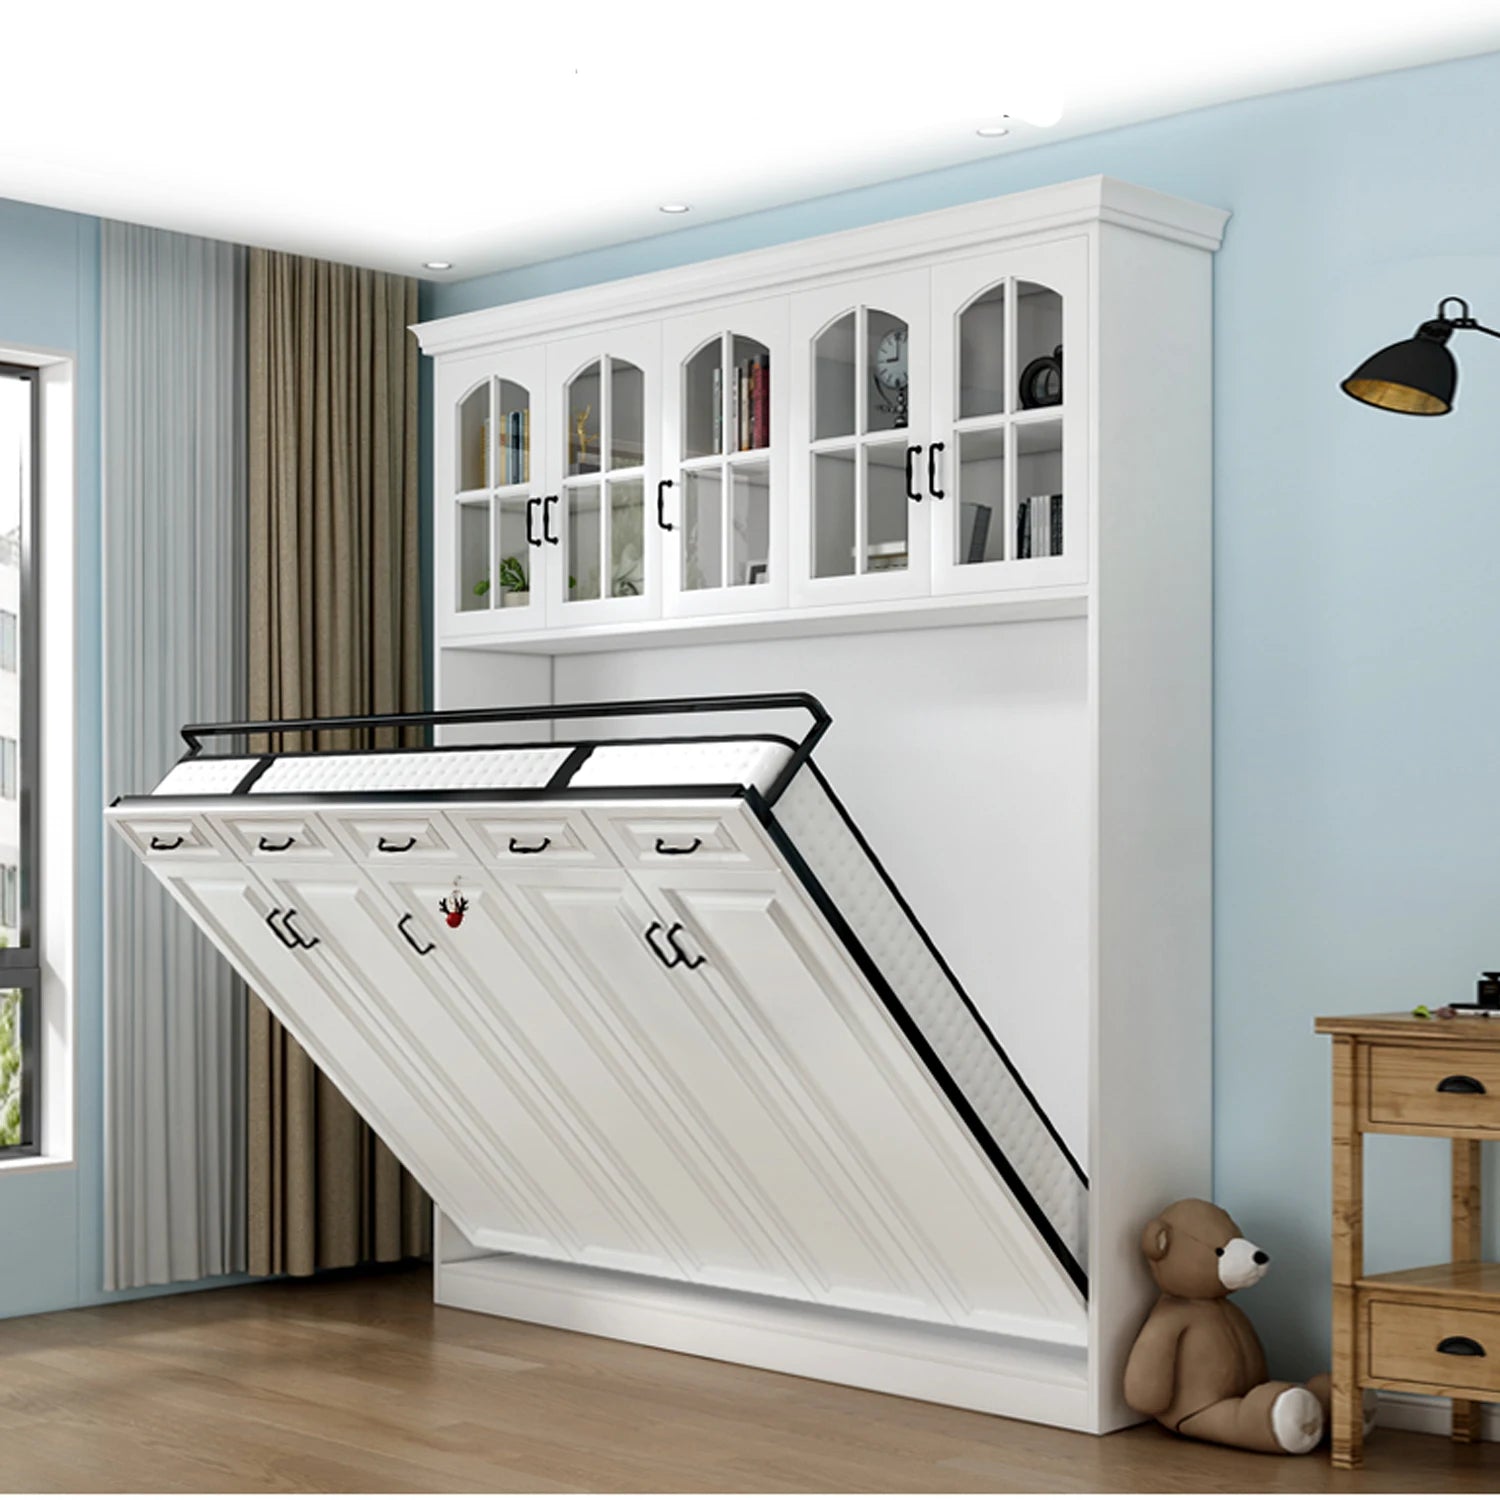 Custom made space saving  with wardrobe storage wine cabinet bookshelf Murphy bed mechanism wall bed